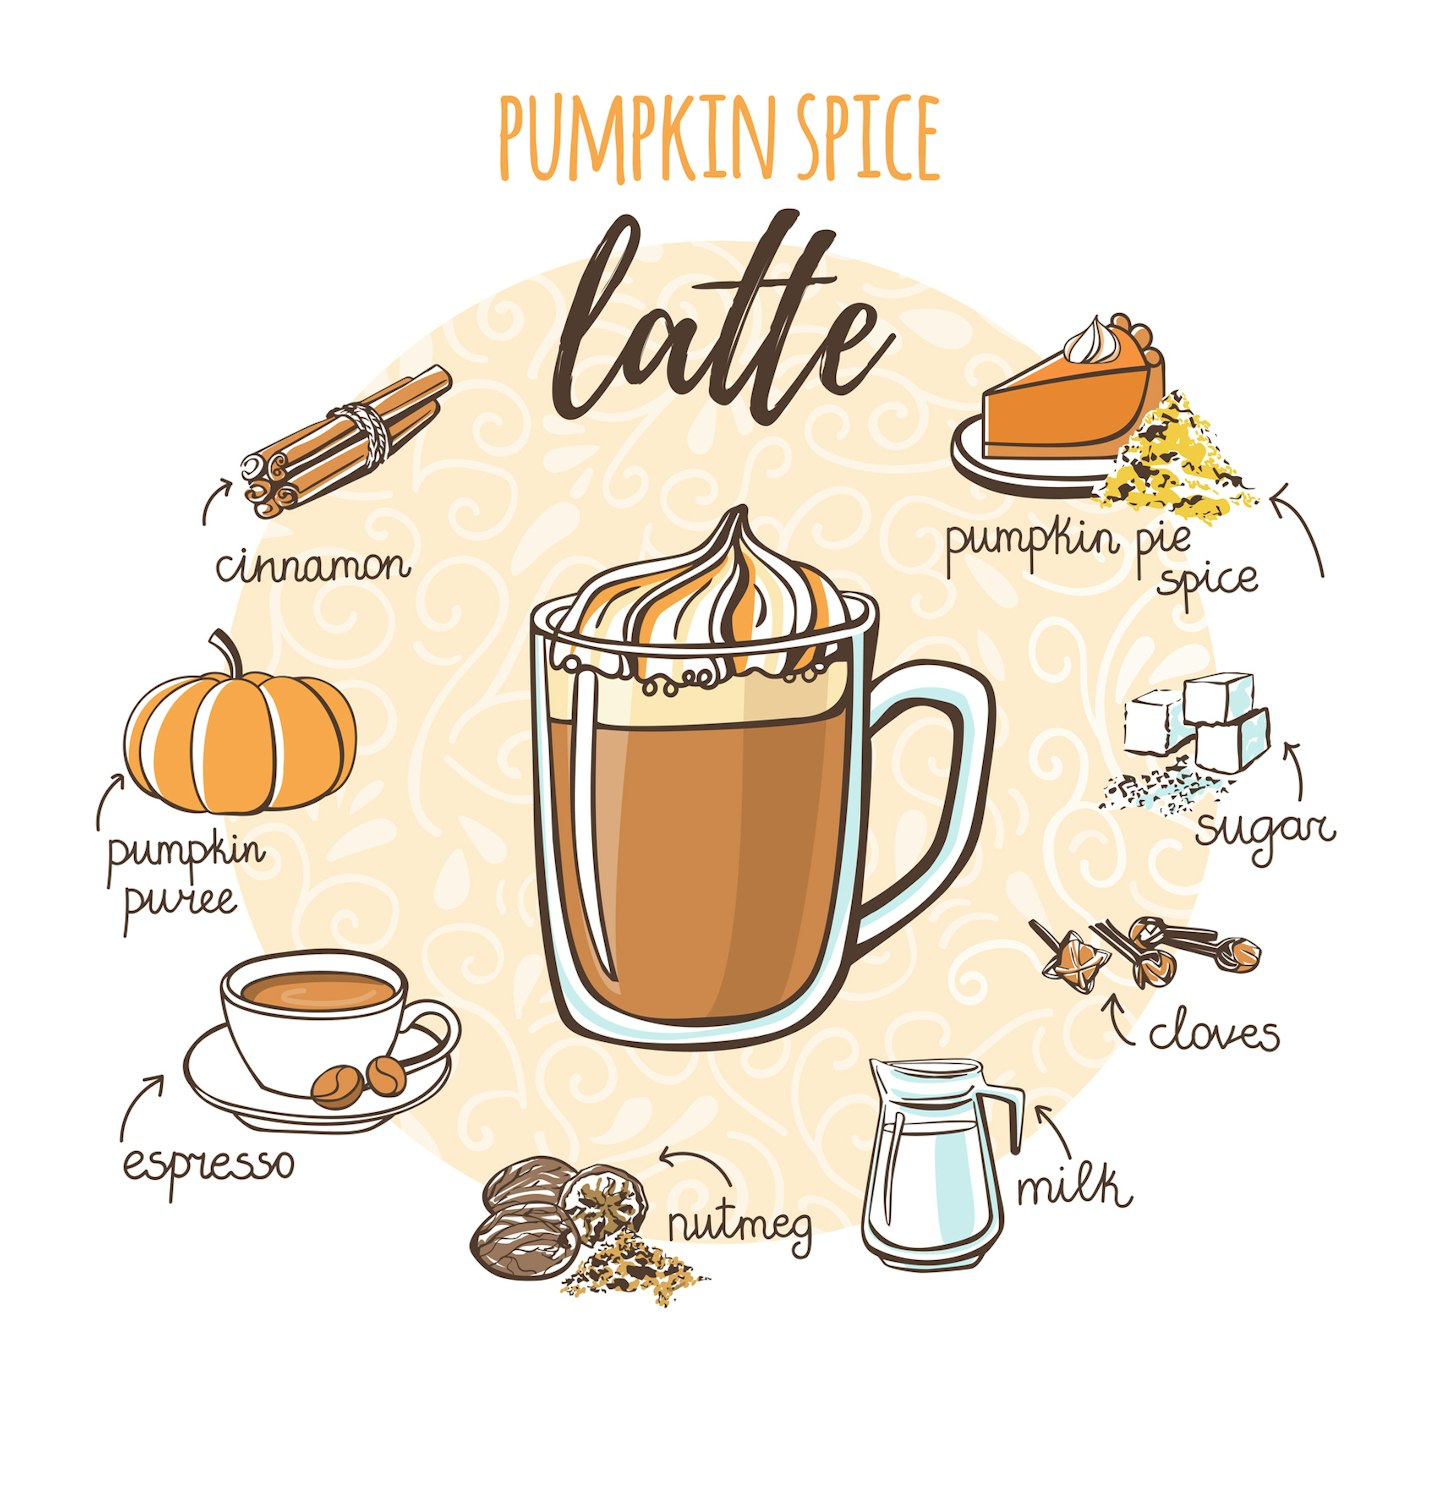 Vector illustration of Pumpkin spice latte ingredients